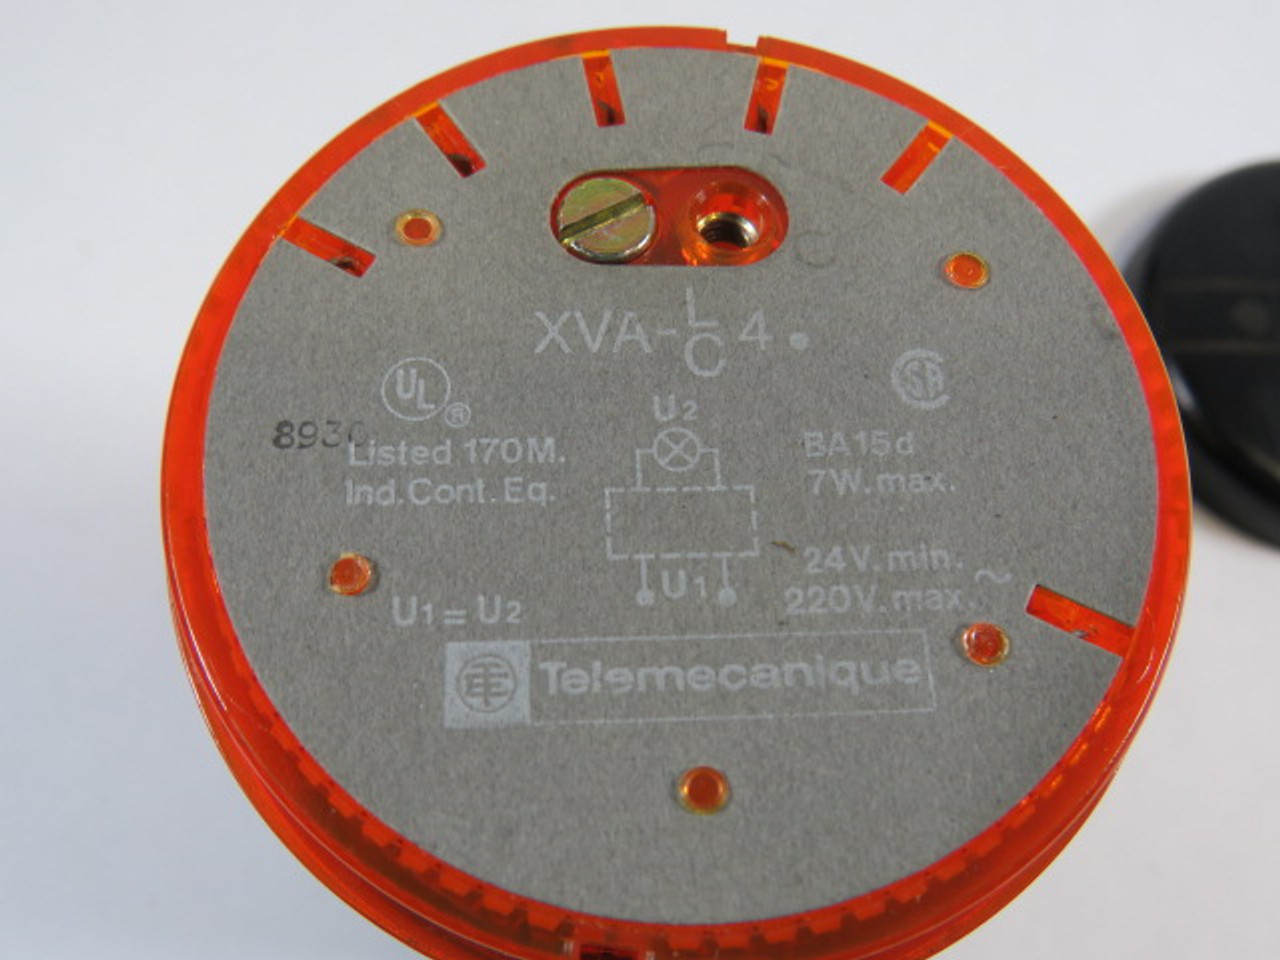 Telemecanique XVA-L45 Orange Stack Light w/ Base & Cap 220V 7W w/ Bulb USED